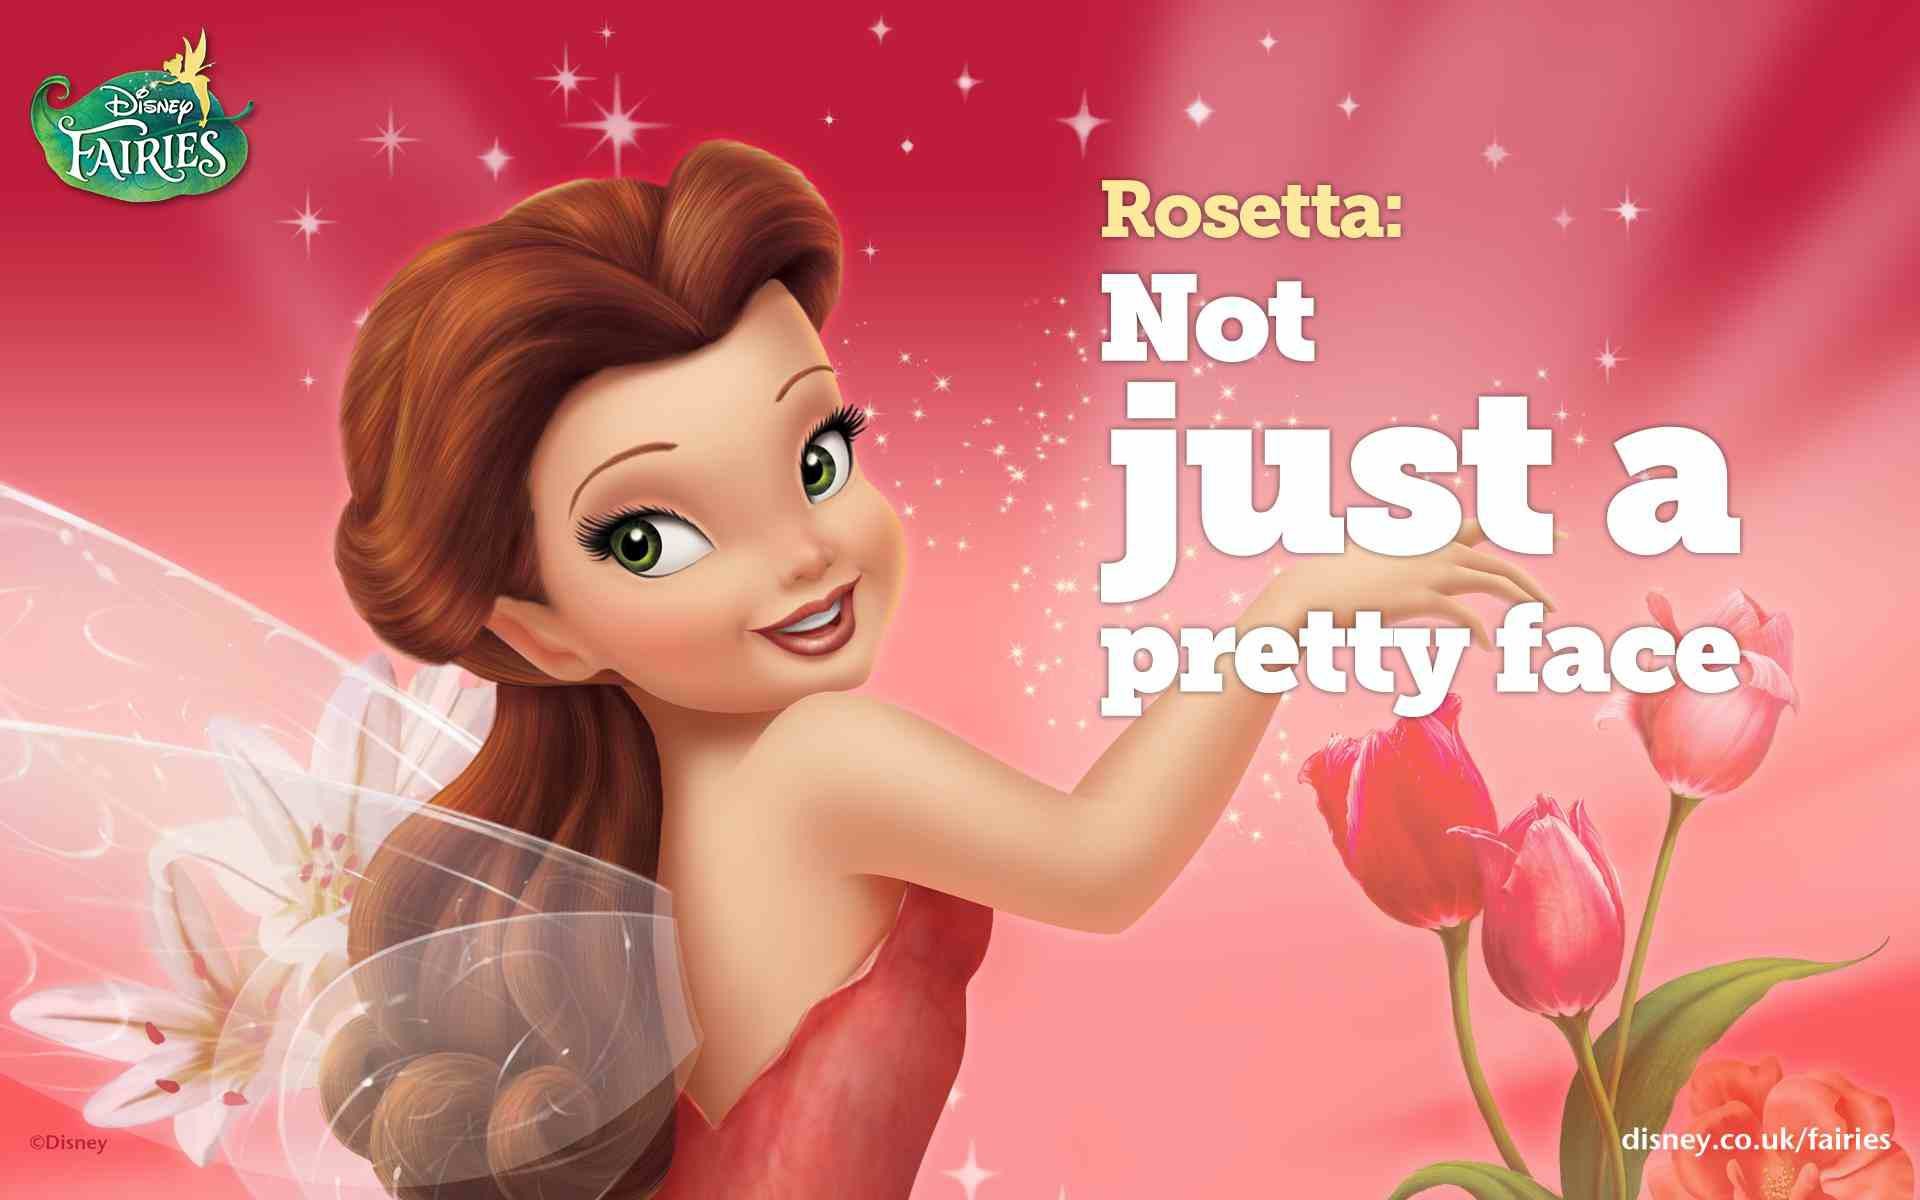 1920x1200 Disney Fairies Rosetta Not just a pretty face.jpg